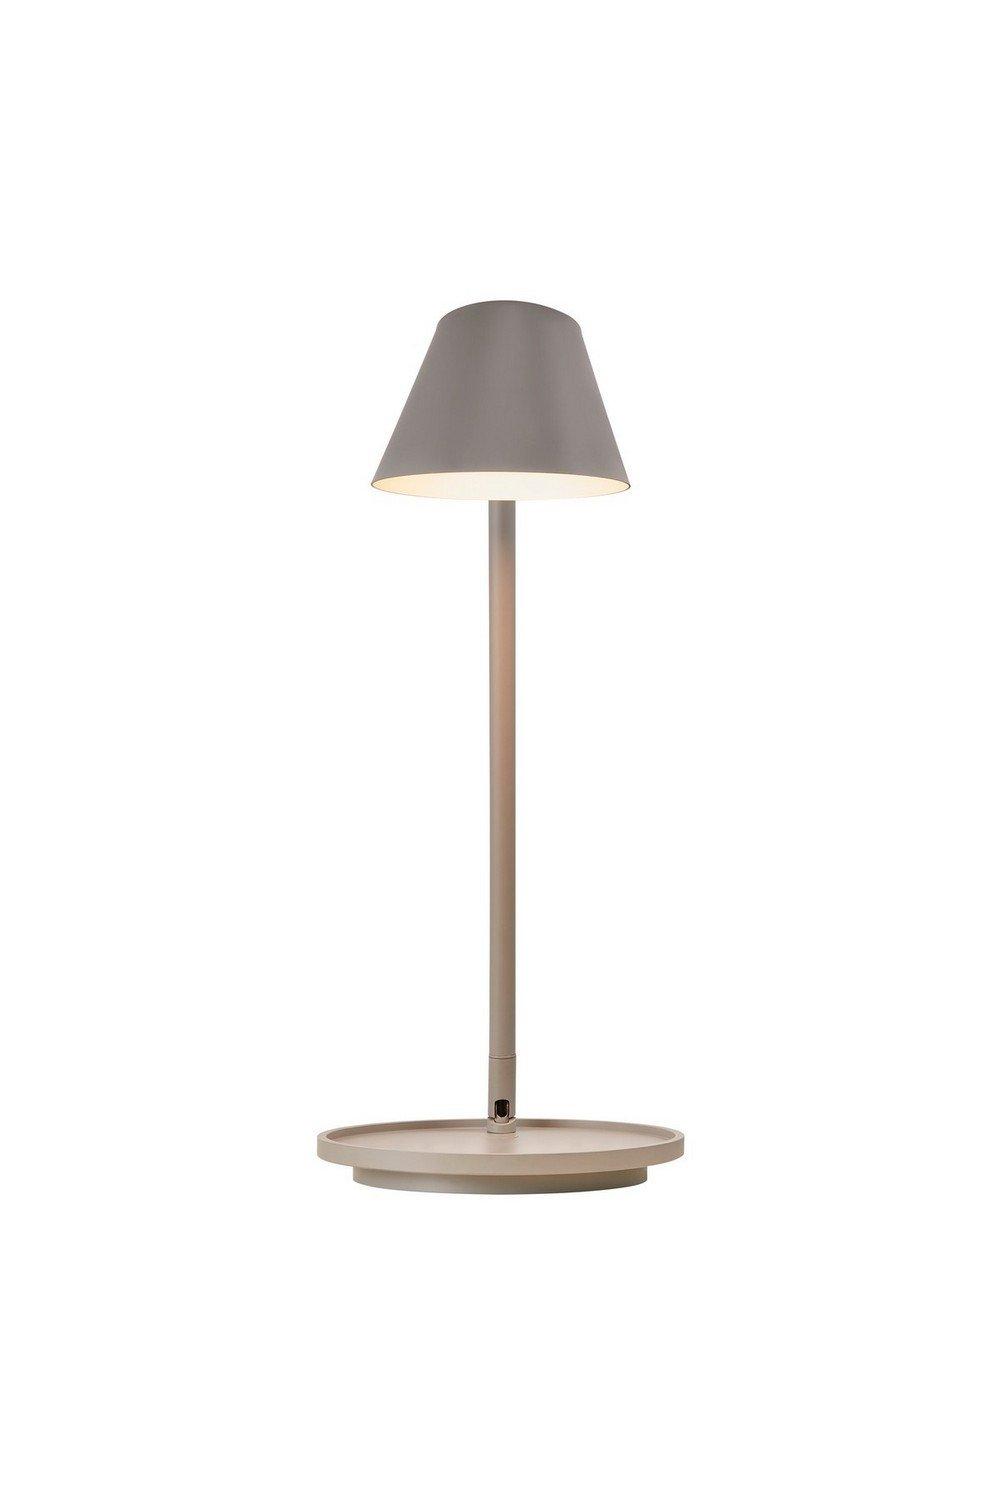 Stay LED Dimmable Desk Task Lamp Grey 2700K